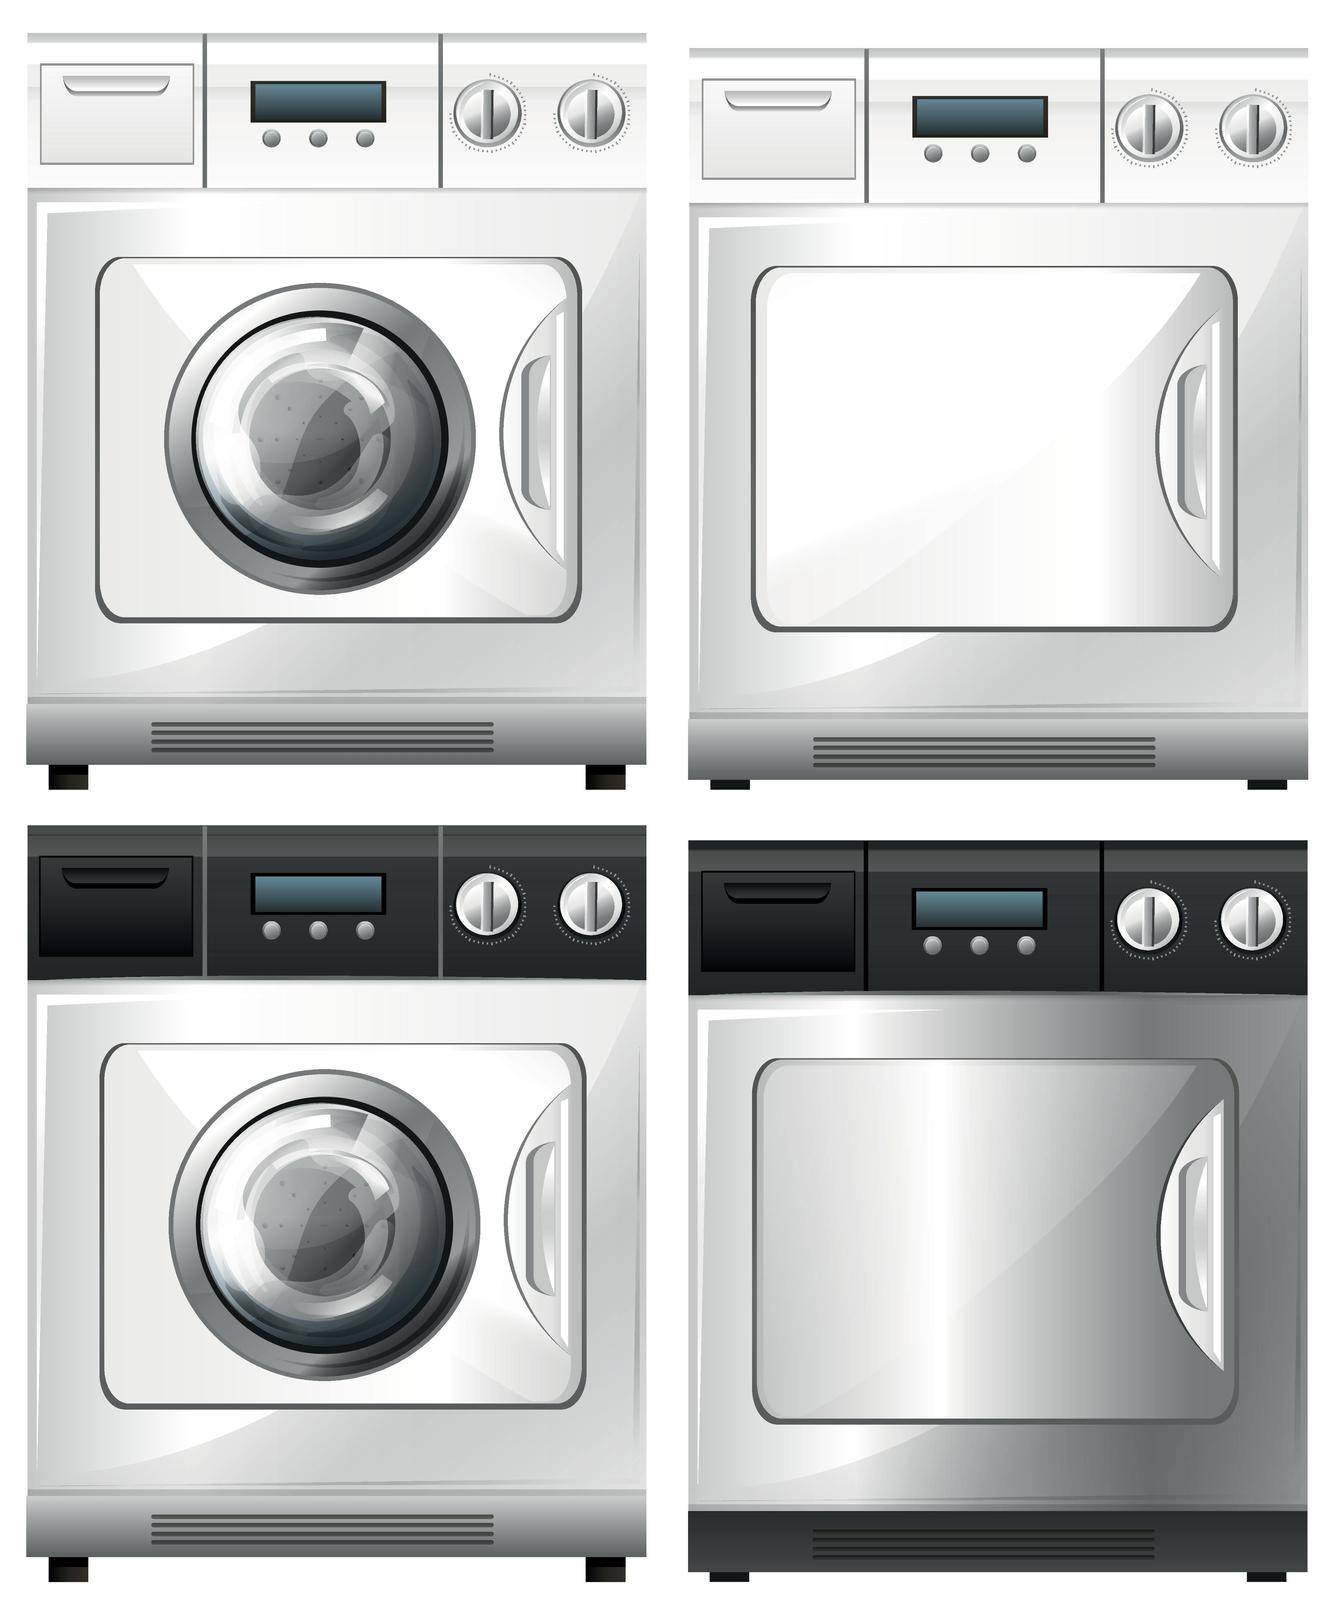 Washing machine and dryer machine by iimages